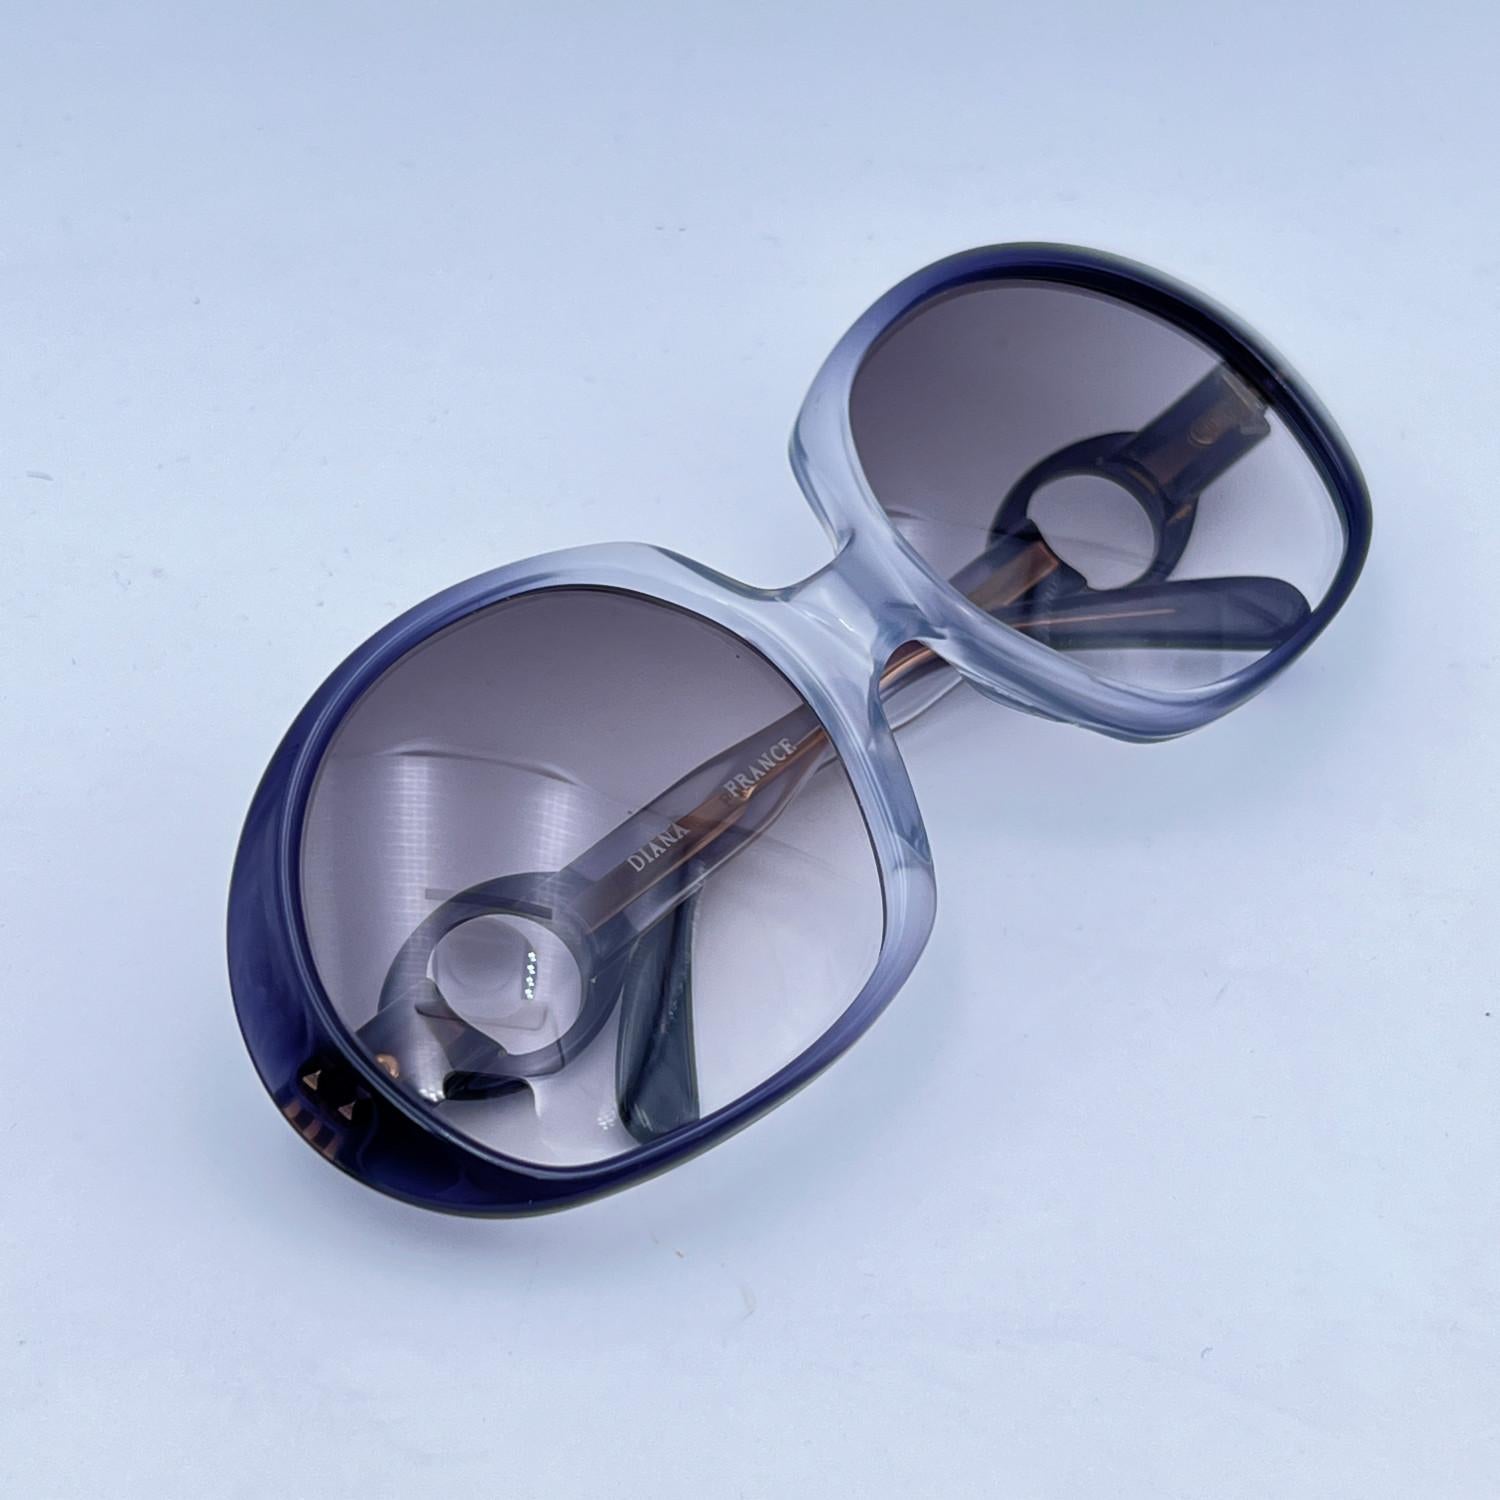 Diana vintage sunglasses. mod. Cordelia. Grey acetate oversized frame. Gradient lenses in grey color. Made in France.

Details

MATERIAL: Acetate

COLOR: Grey

MODEL: Cordelia

GENDER: Women

COUNTRY OF MANUFACTURE: France

ORIGINAL CASE?: No, we